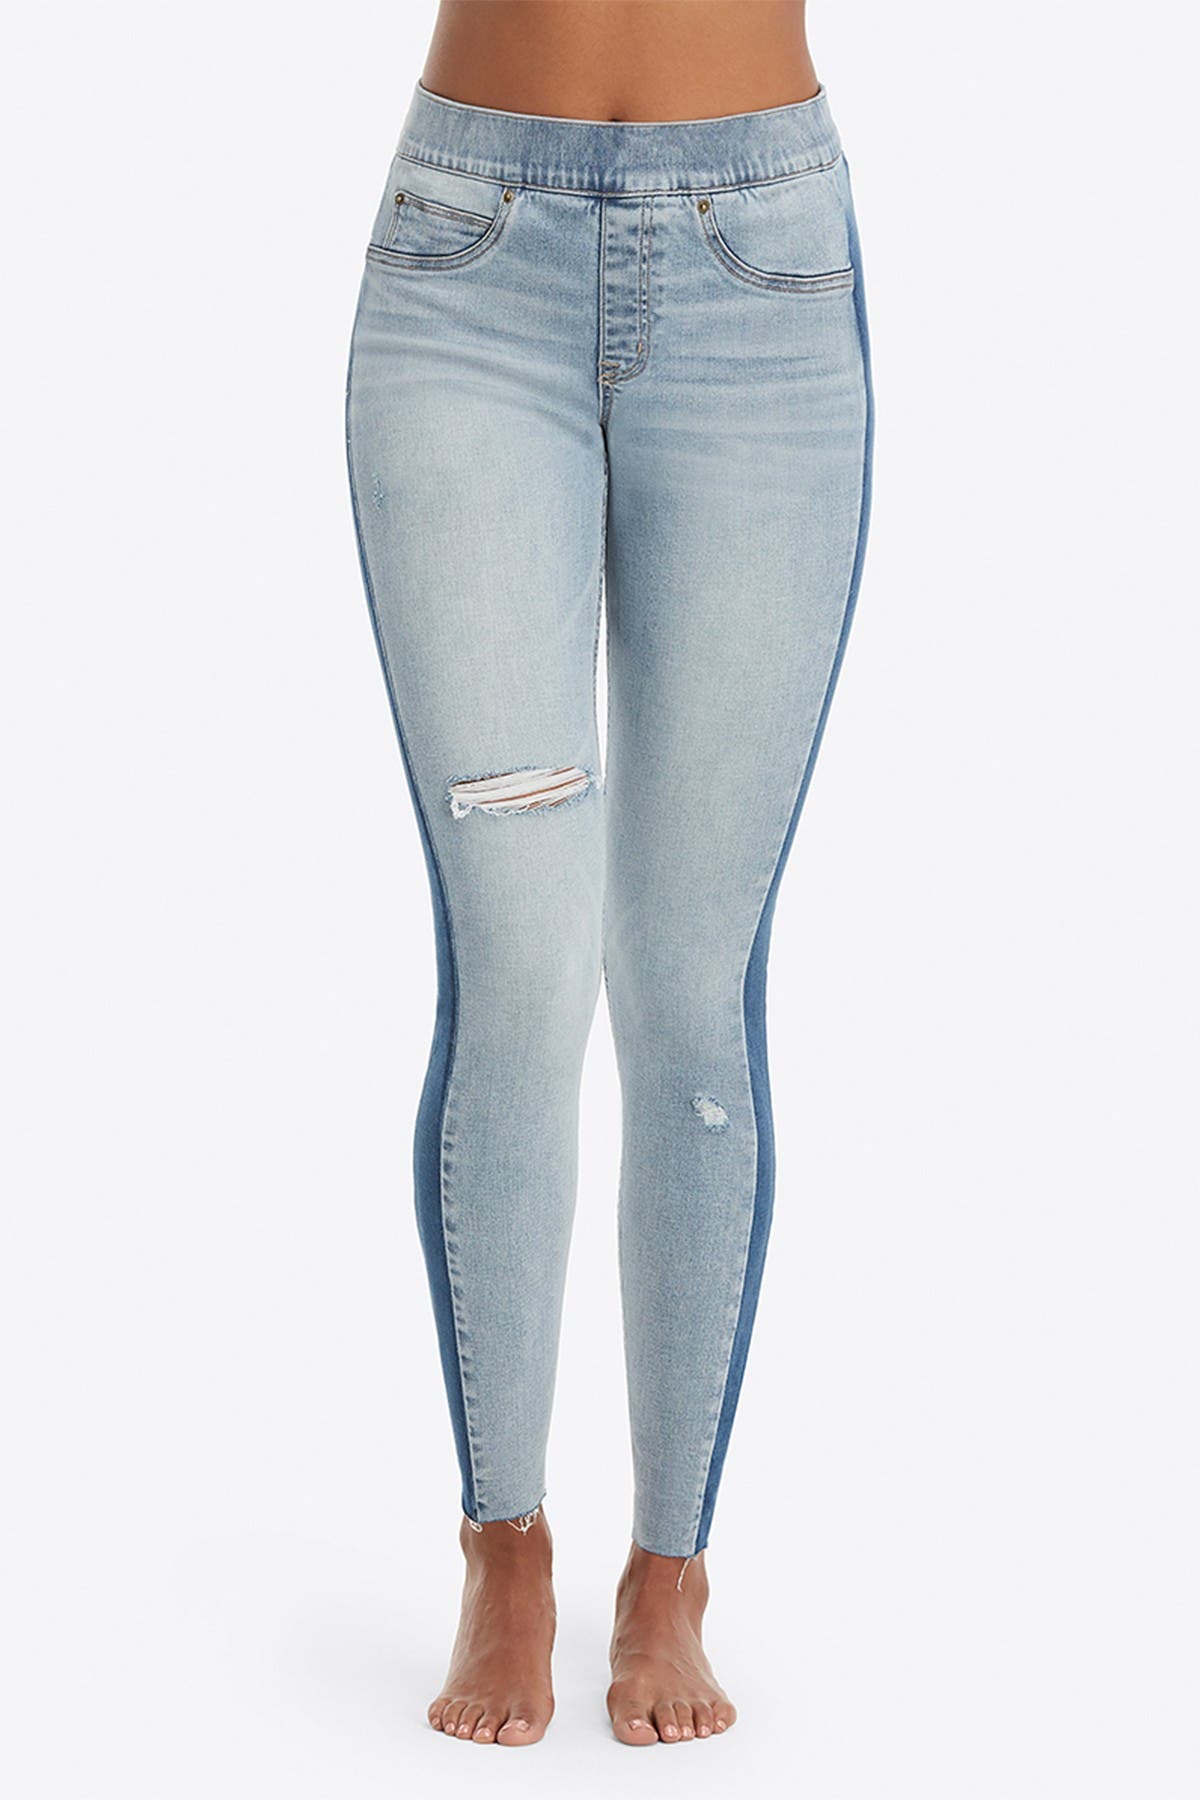 spanx distressed skinny jeans reviews